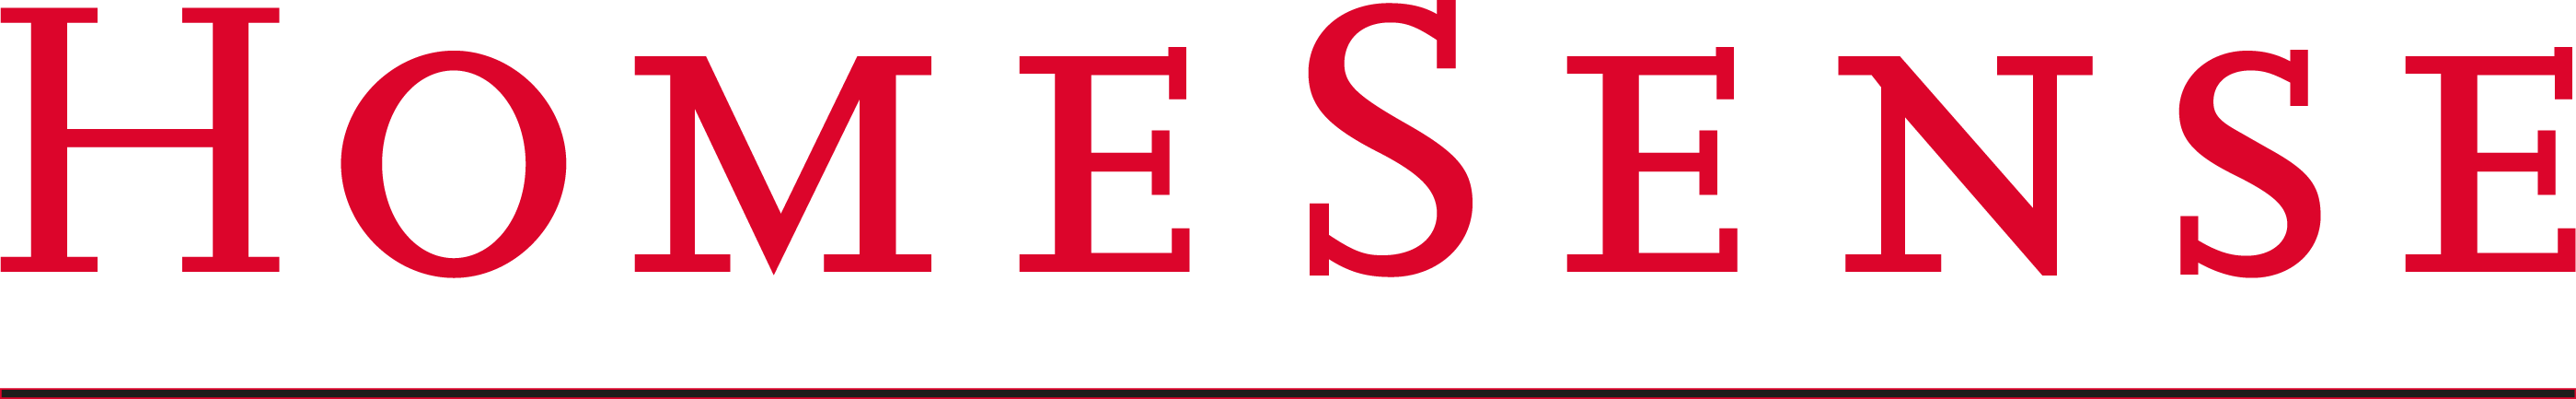 HomeSense Logo - HomeSense Logo Free Vector Download